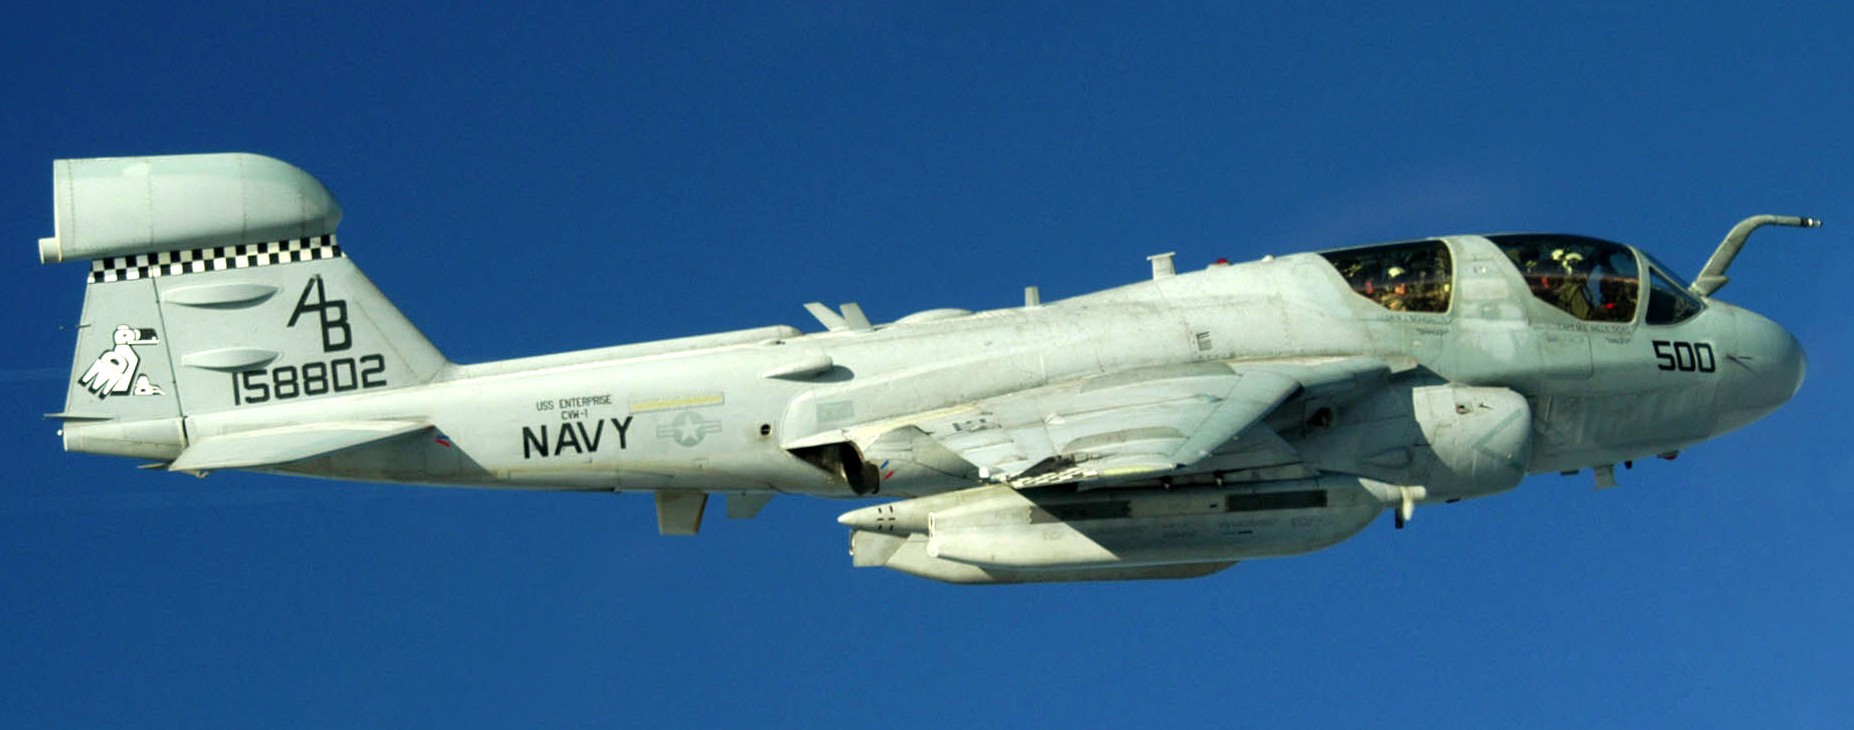 vaq-137 rooks electronic attack squadron us navy ea-6b prowler carrier air wing cvw-1 uss enterprise cvn-65 05